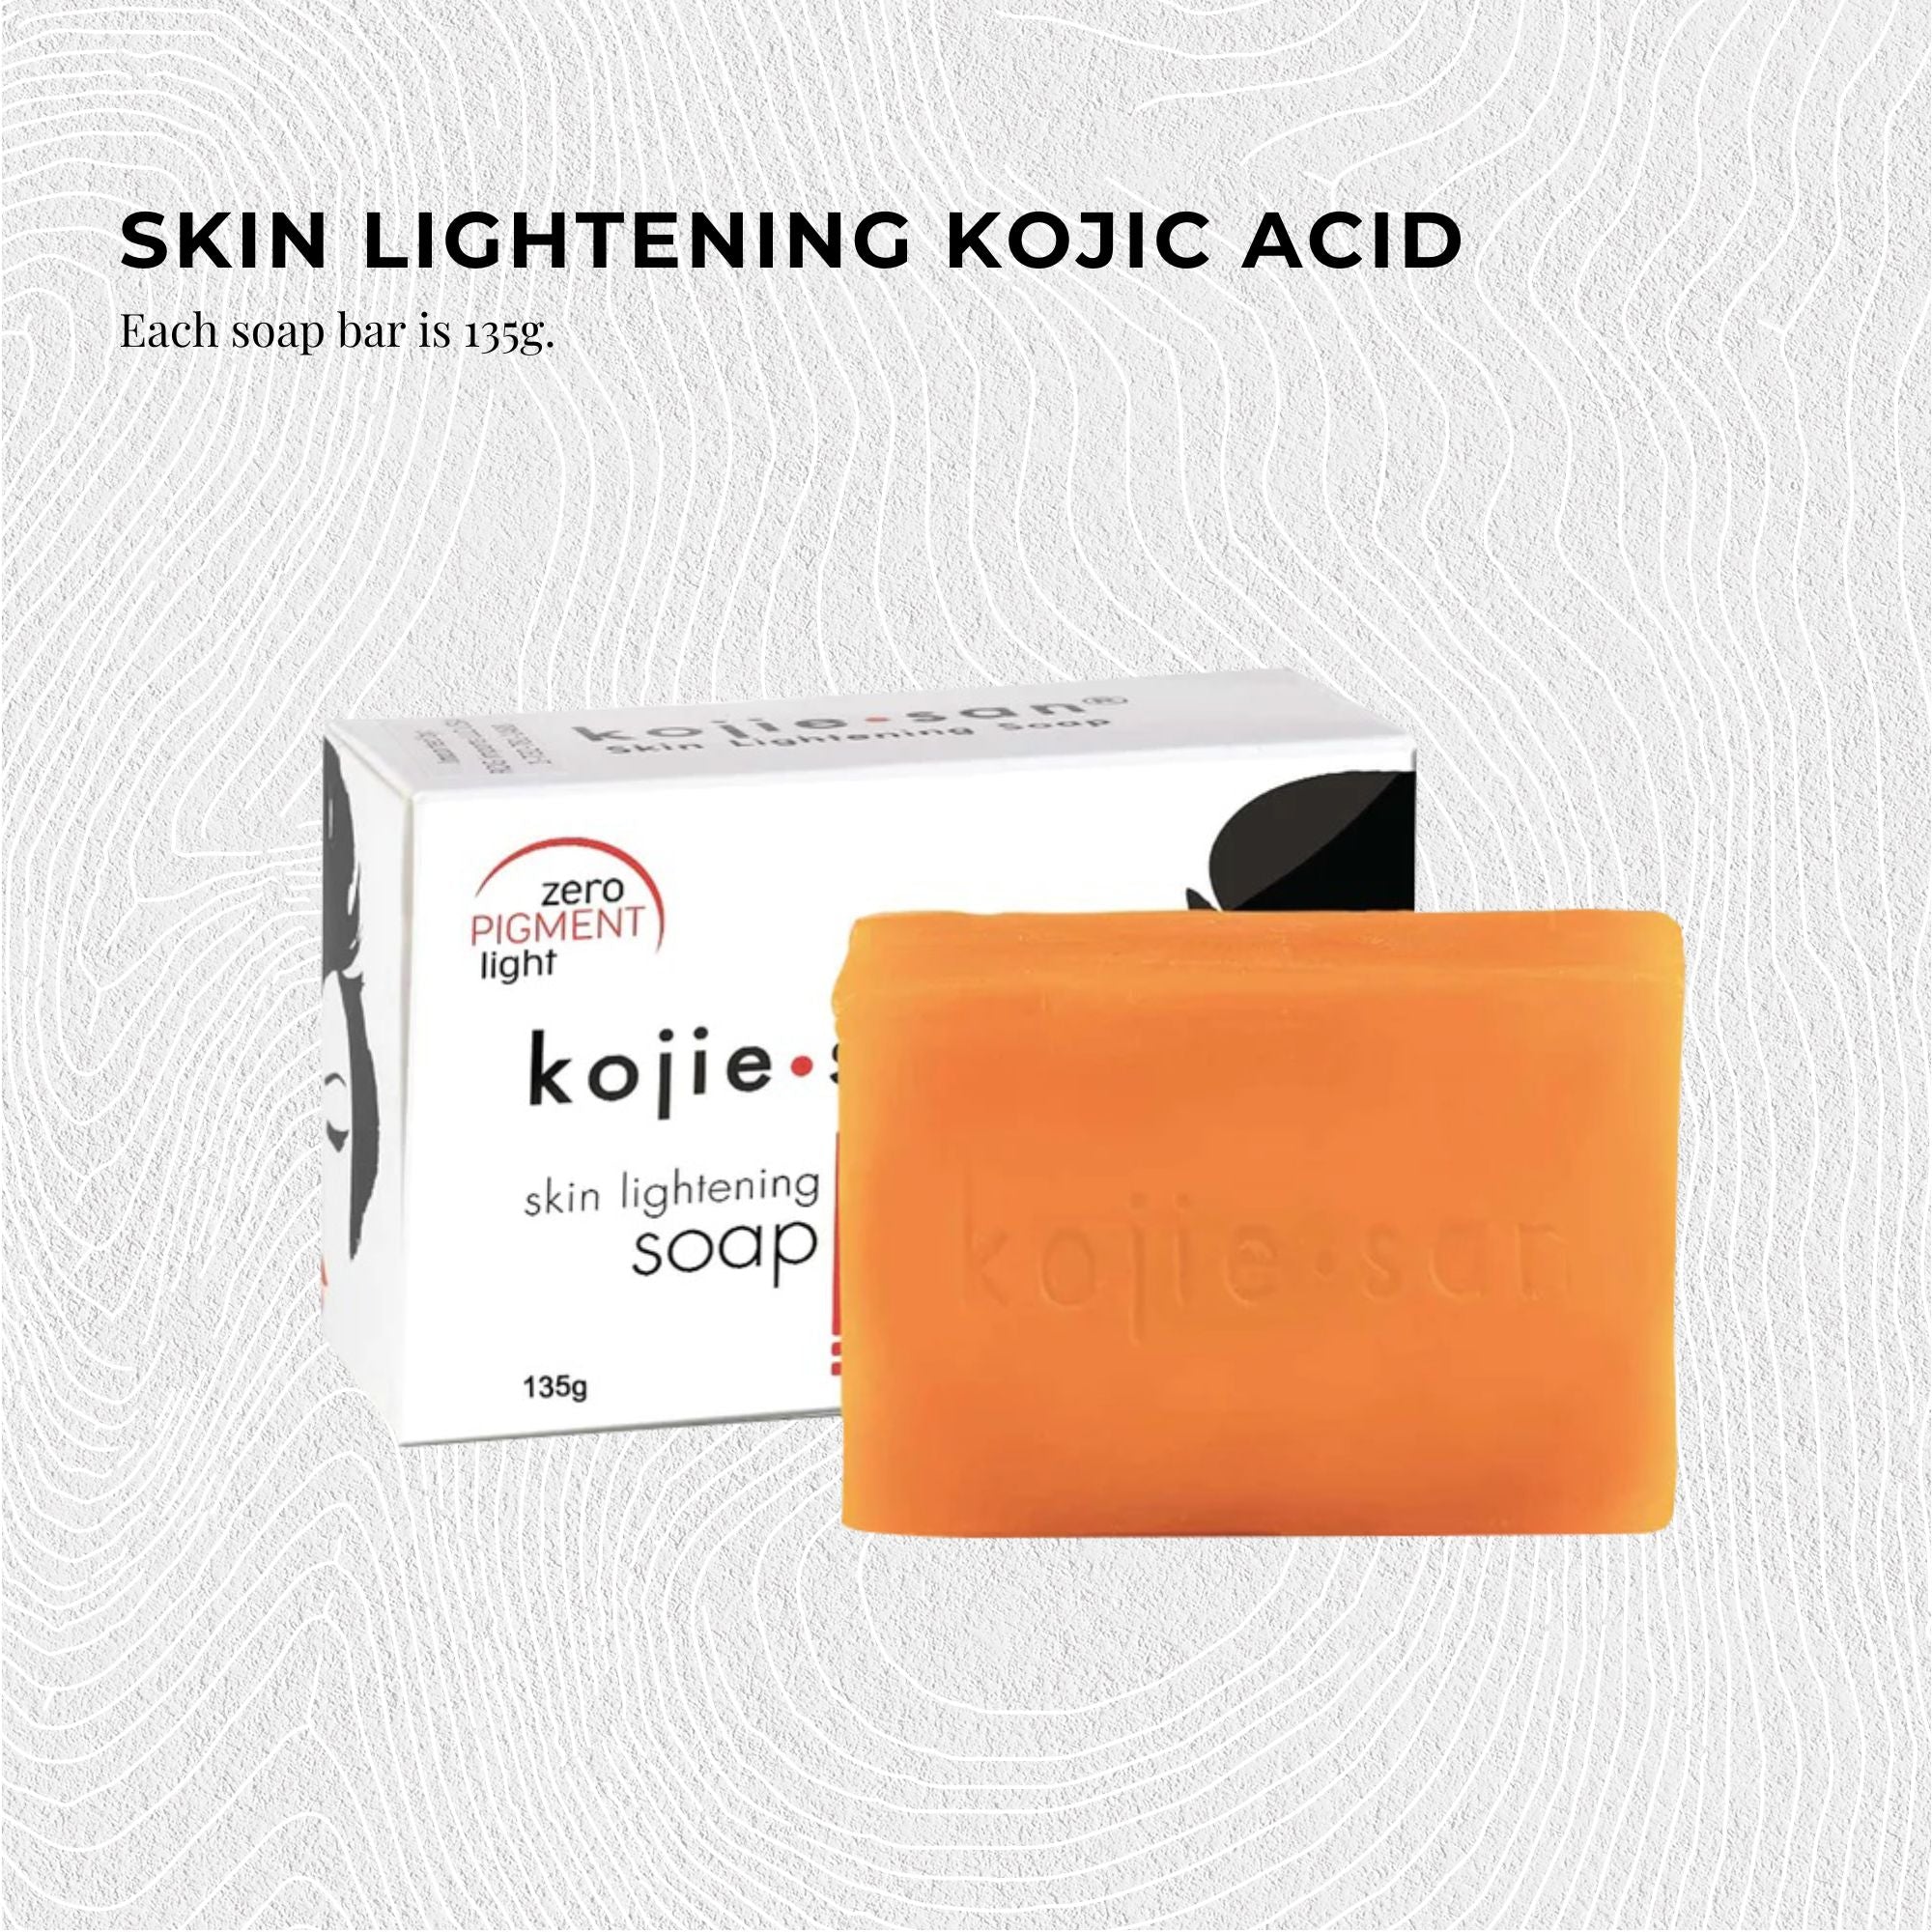 1x  Soap Bar - 135g Skin Lightening Kojic Acid Natural Original Bars